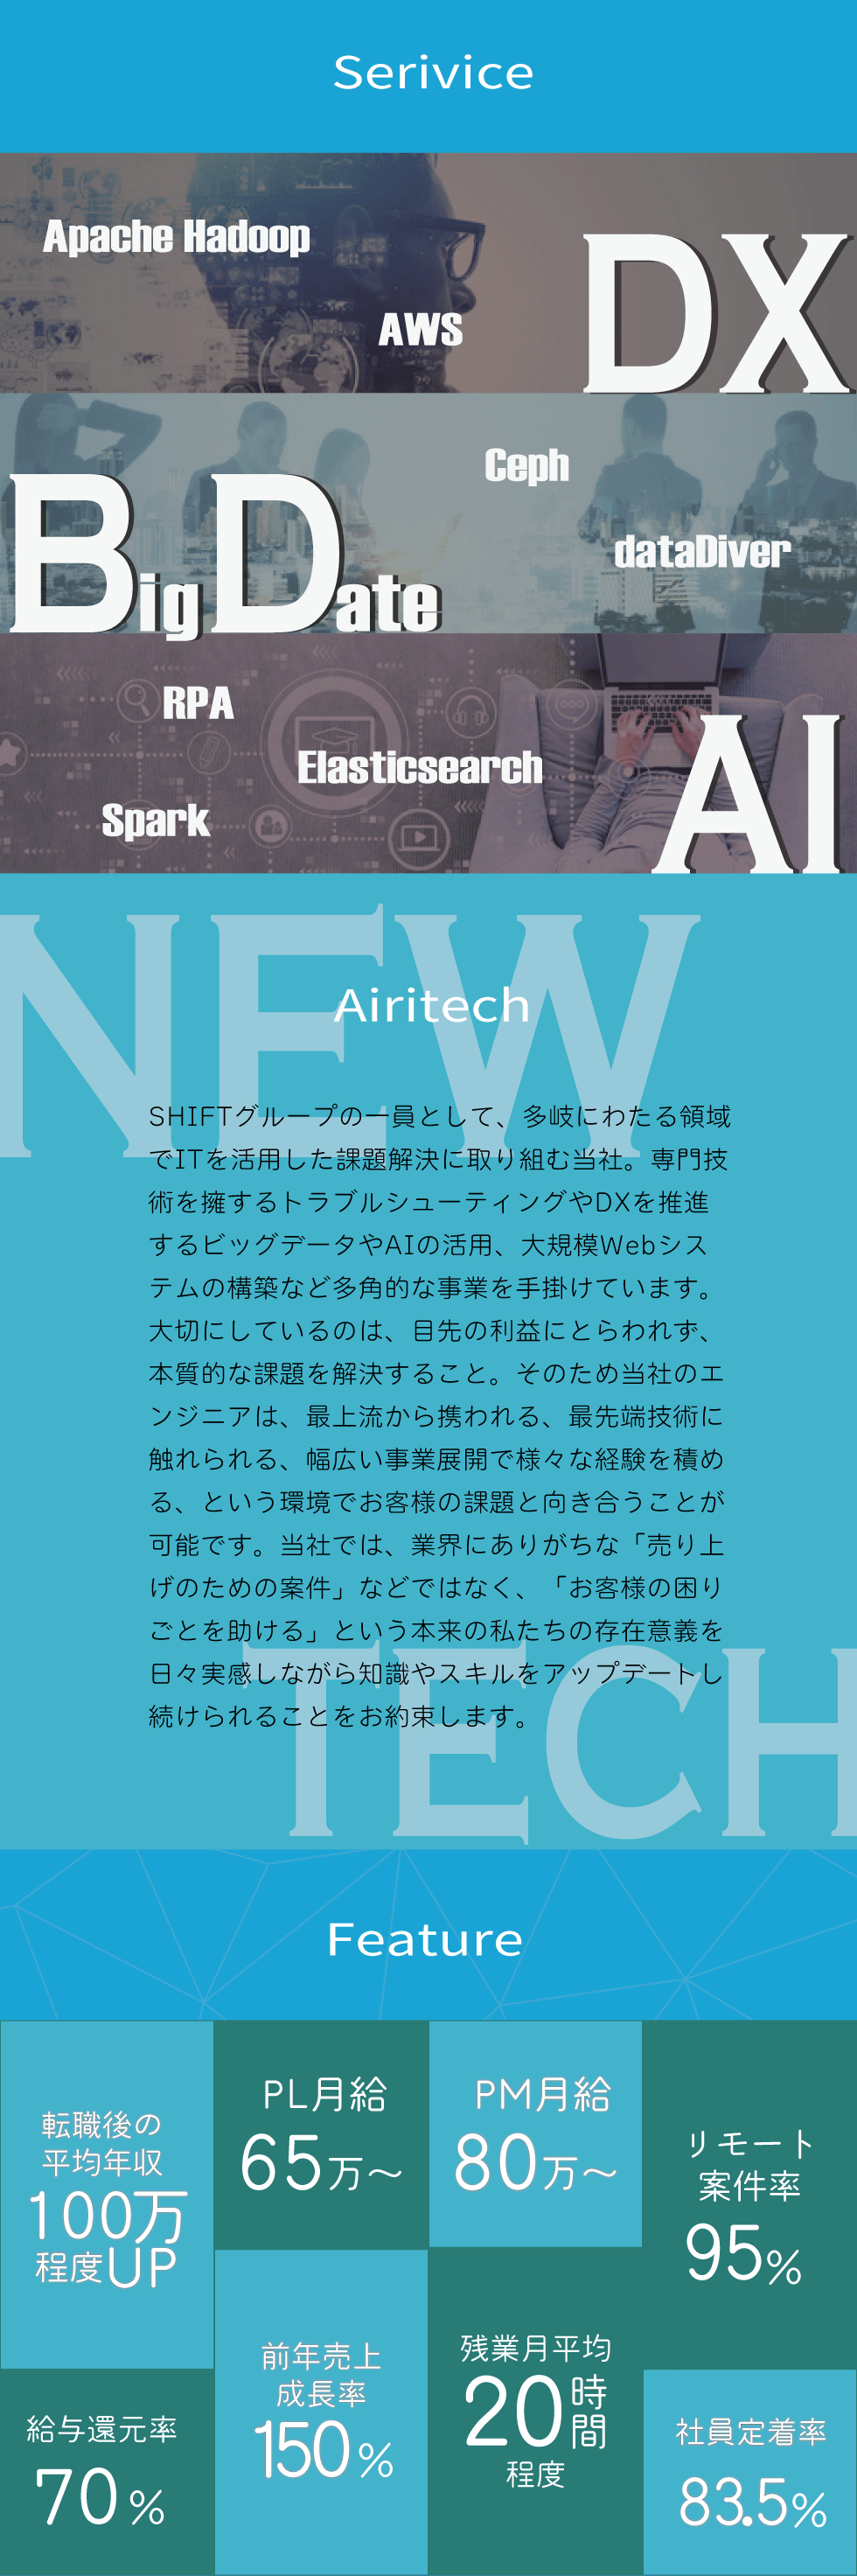 Airitech株式会社【SHIFT（東証一部）グループ】